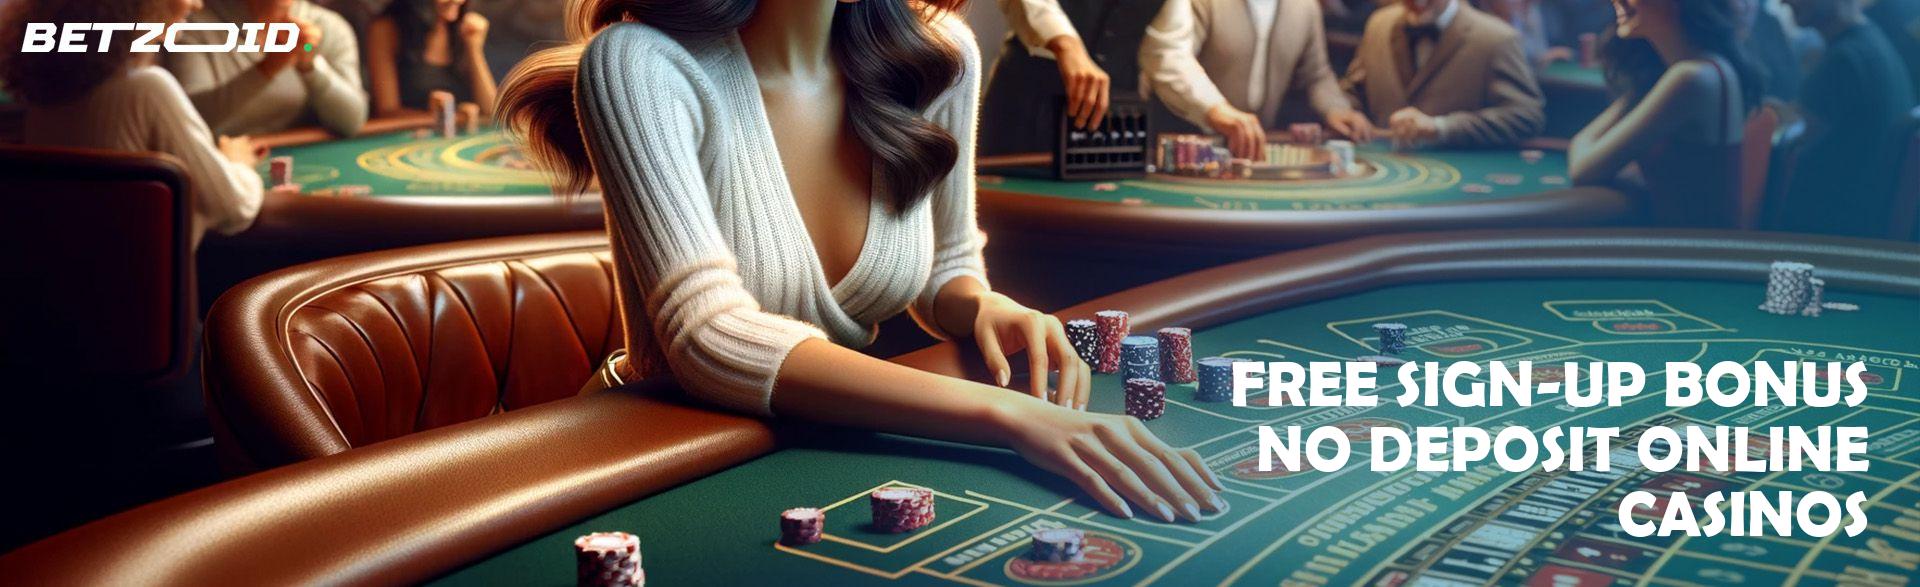 Free Sign-Up Bonus No Deposit Online Casinos.